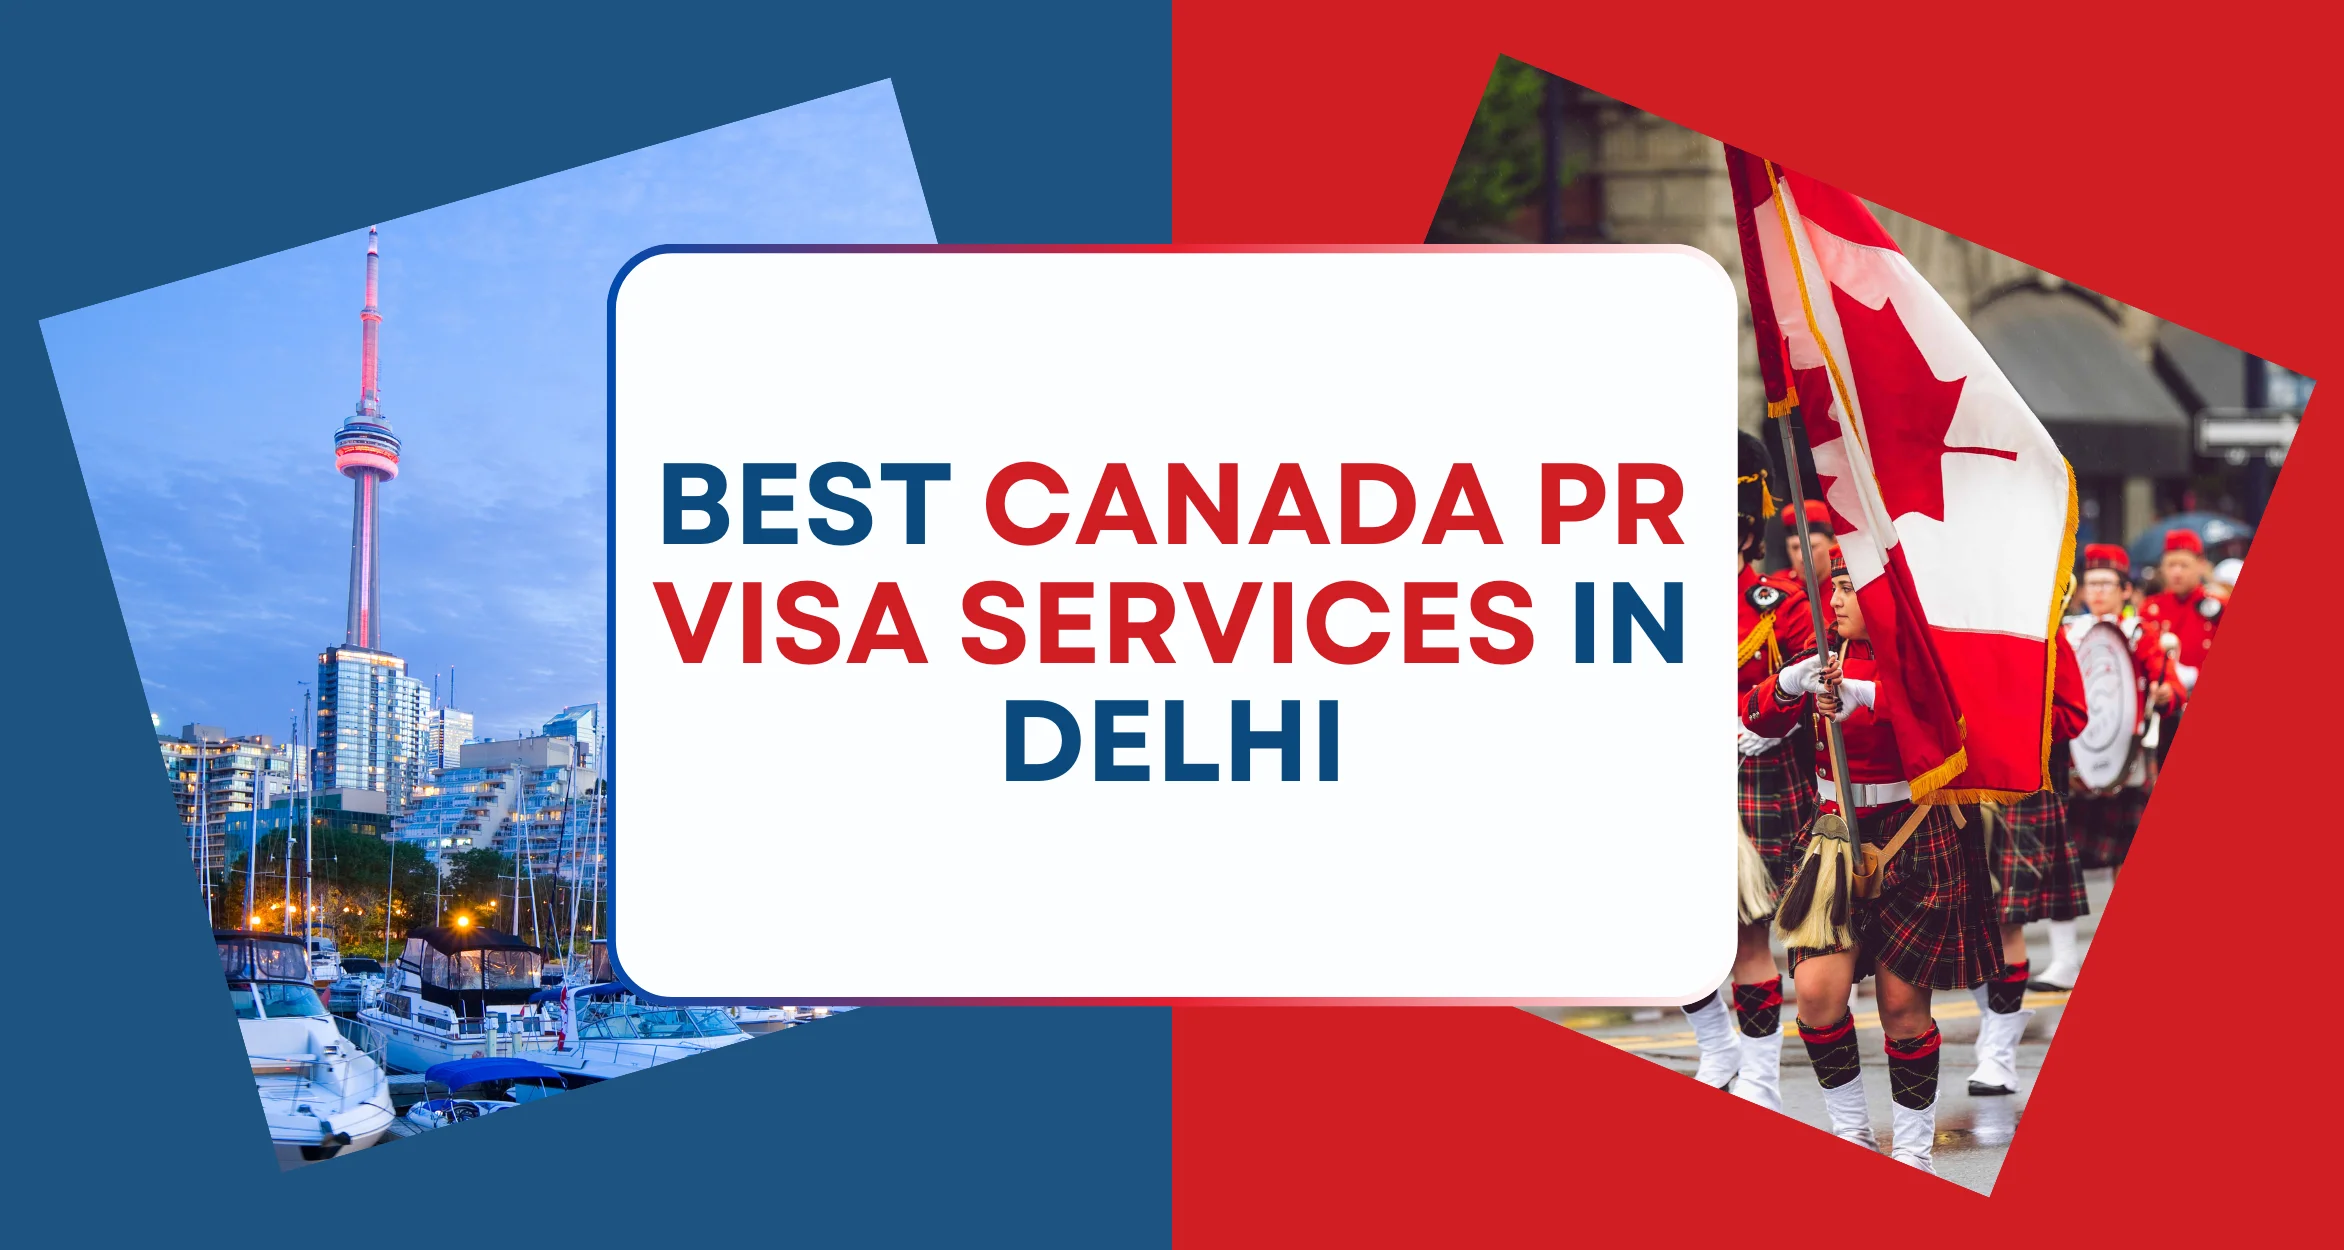 Looking for Best Canada PR Visa Services in Delhi?